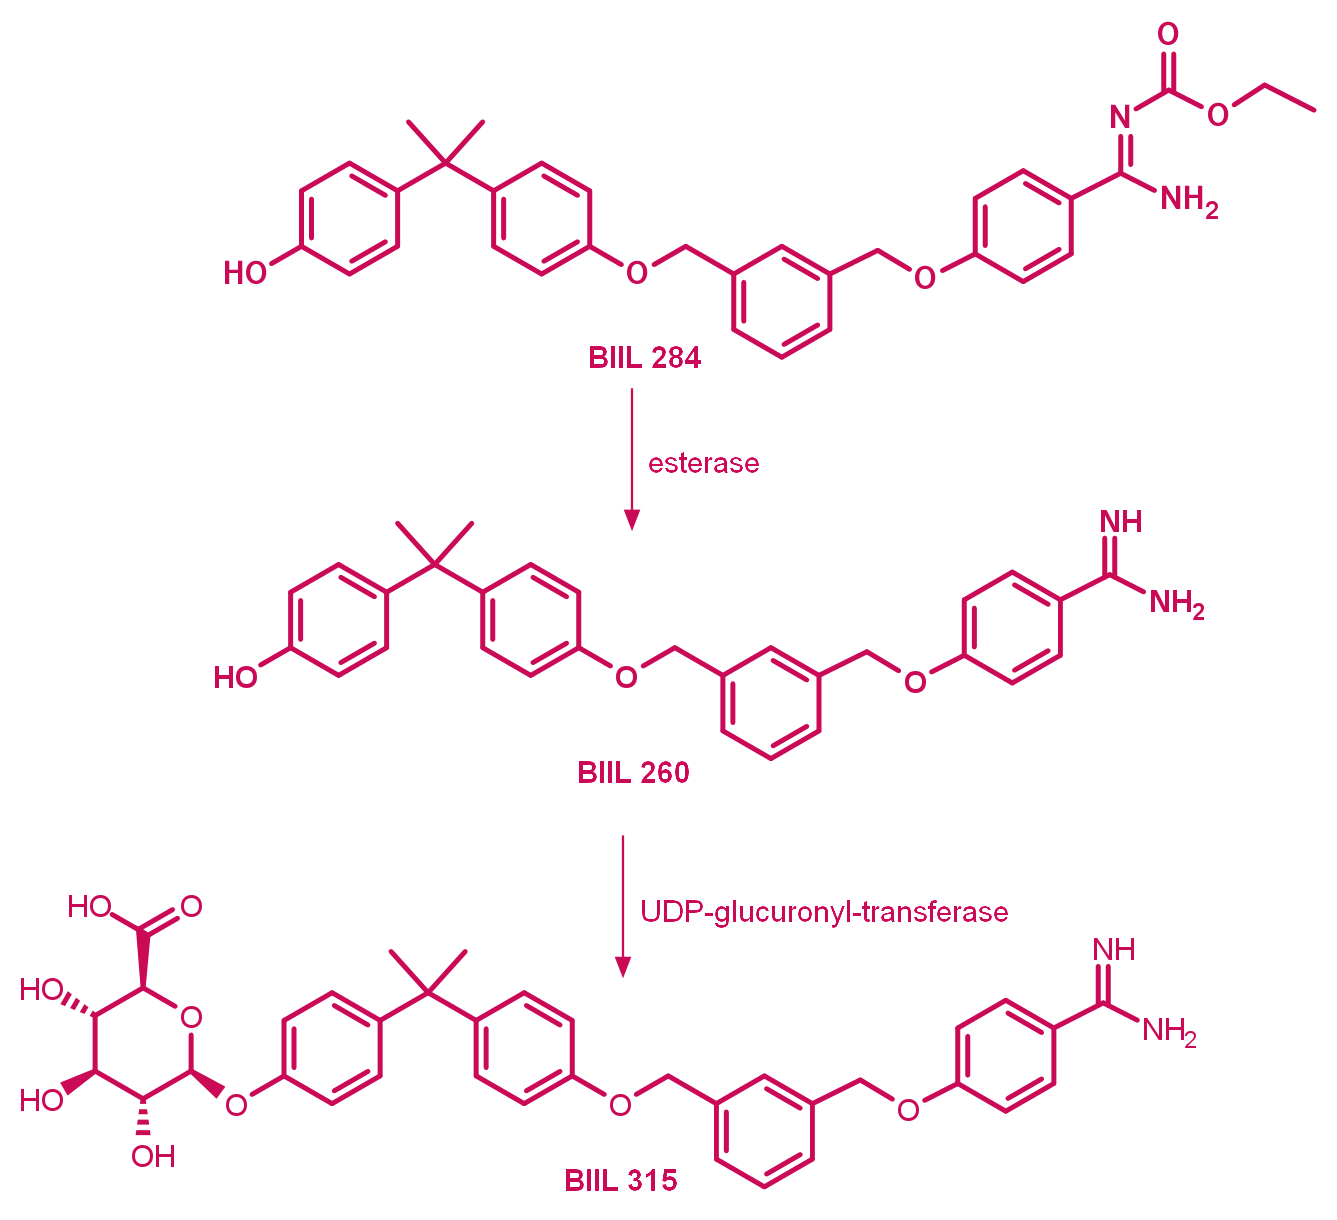 Metabolism of prodrug BIIL 284 to BIIL 260 and BIIL 315